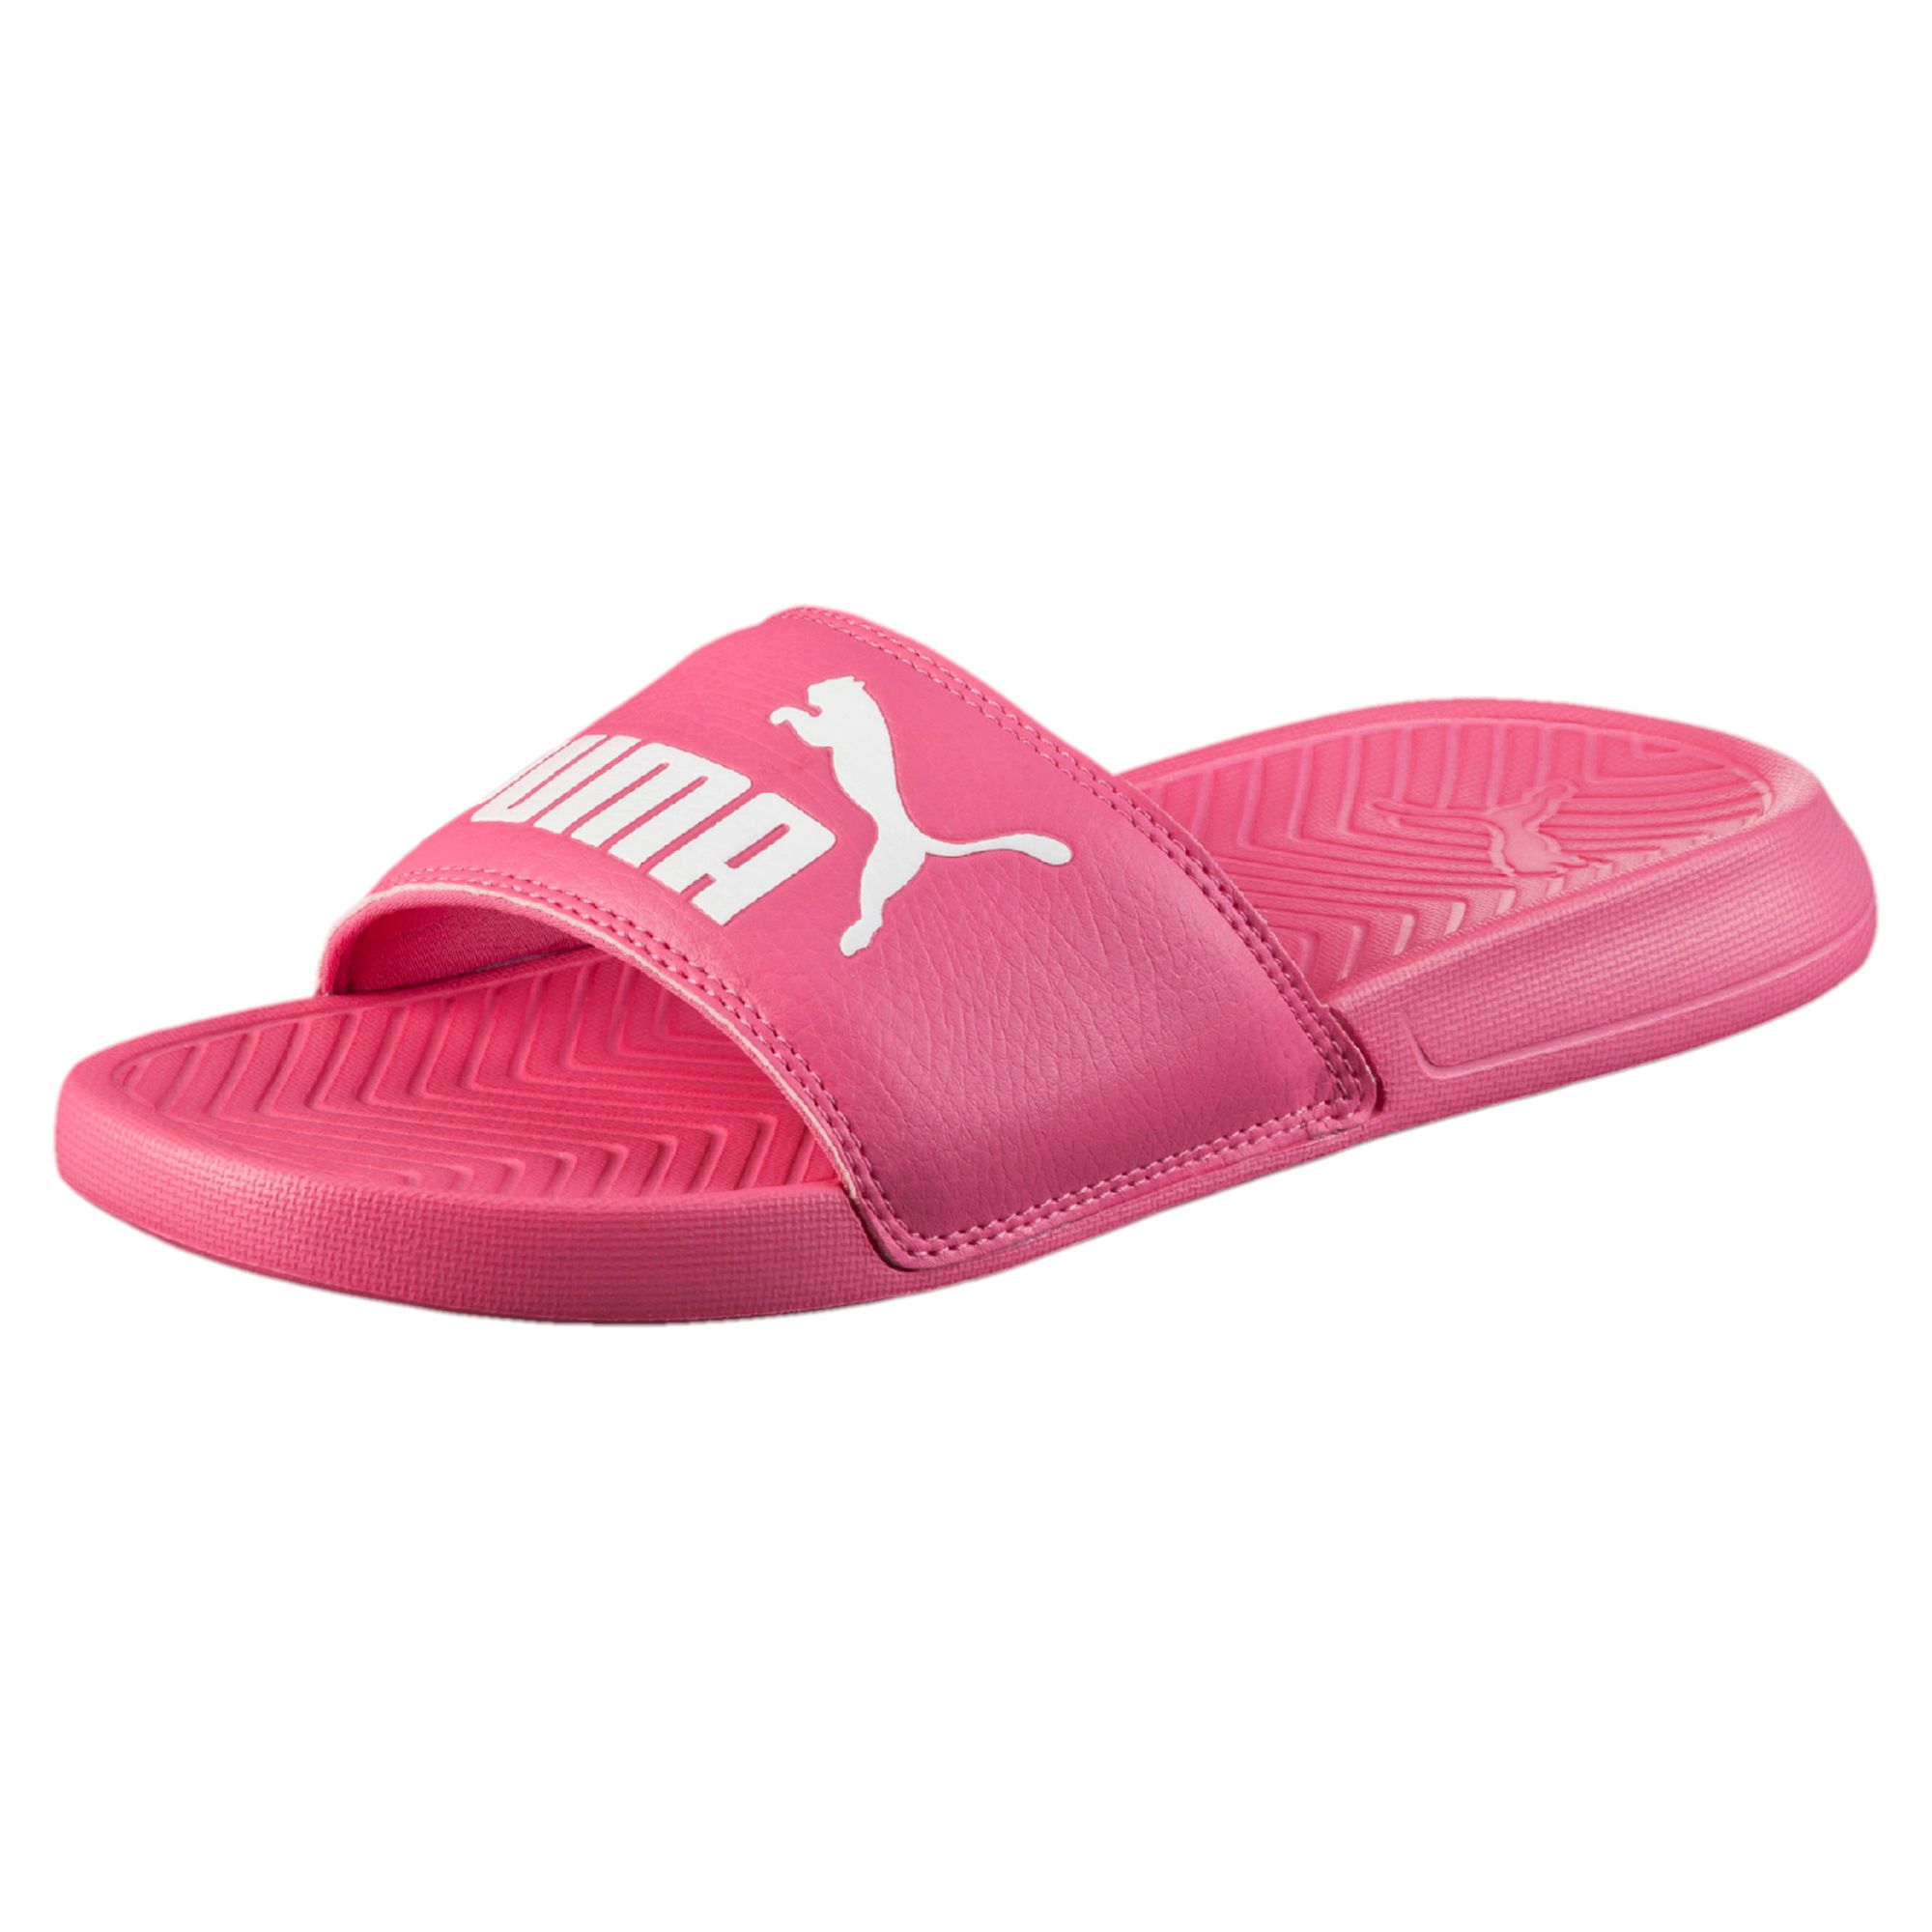 PUMA® Men's Sandals & Slides | Slip-On Soccer Sandals for Men